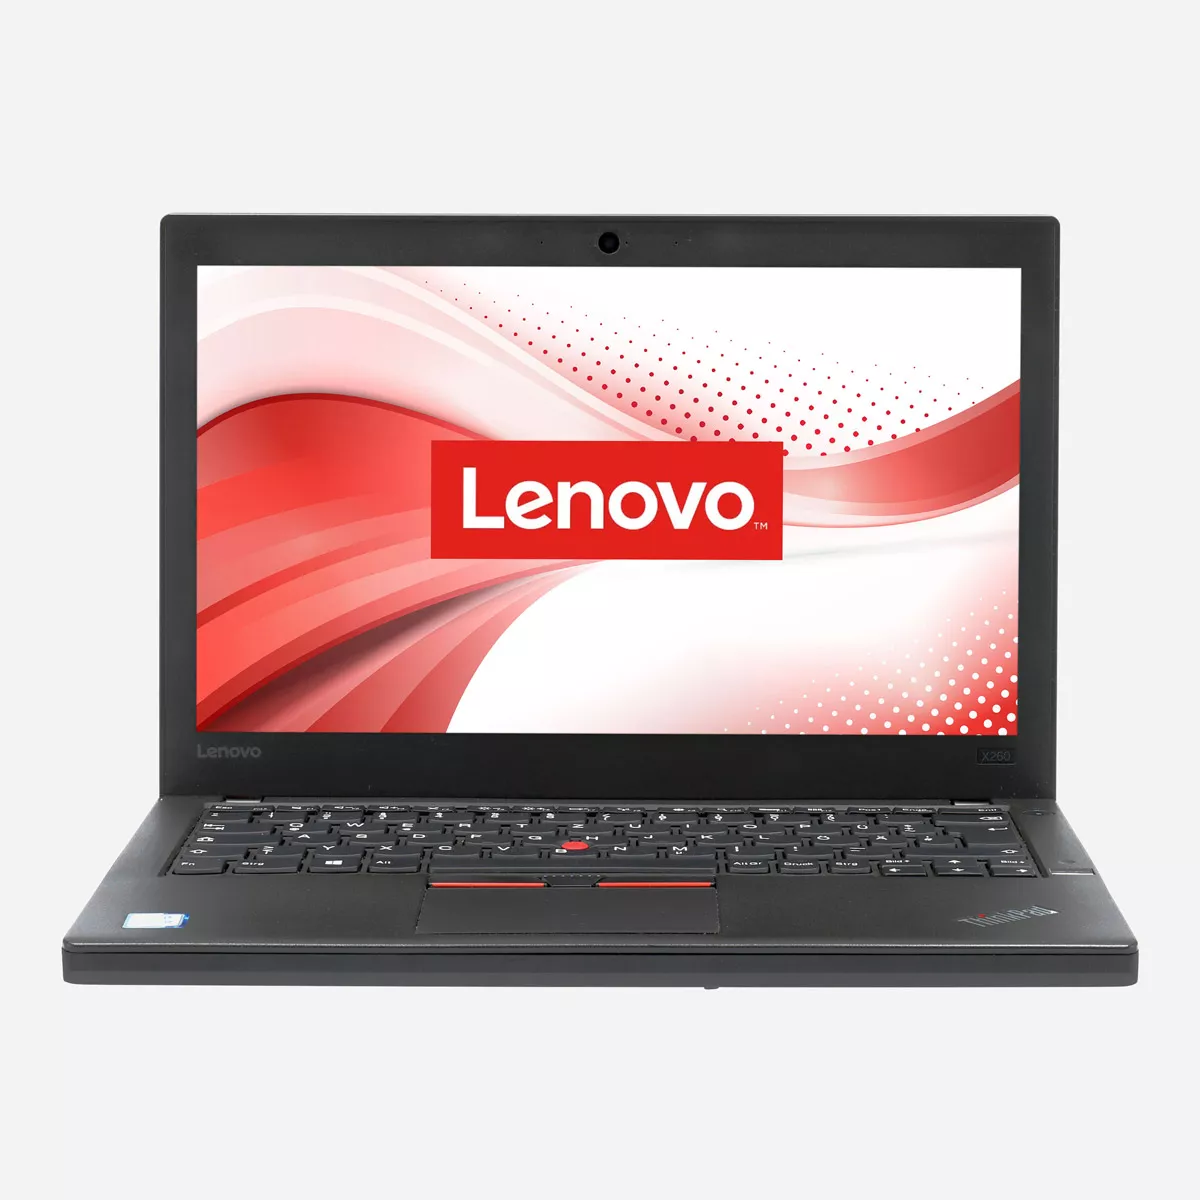 Lenovo ThinkPad X260 Core i5 6300U 240 GB SSD Webcam A+